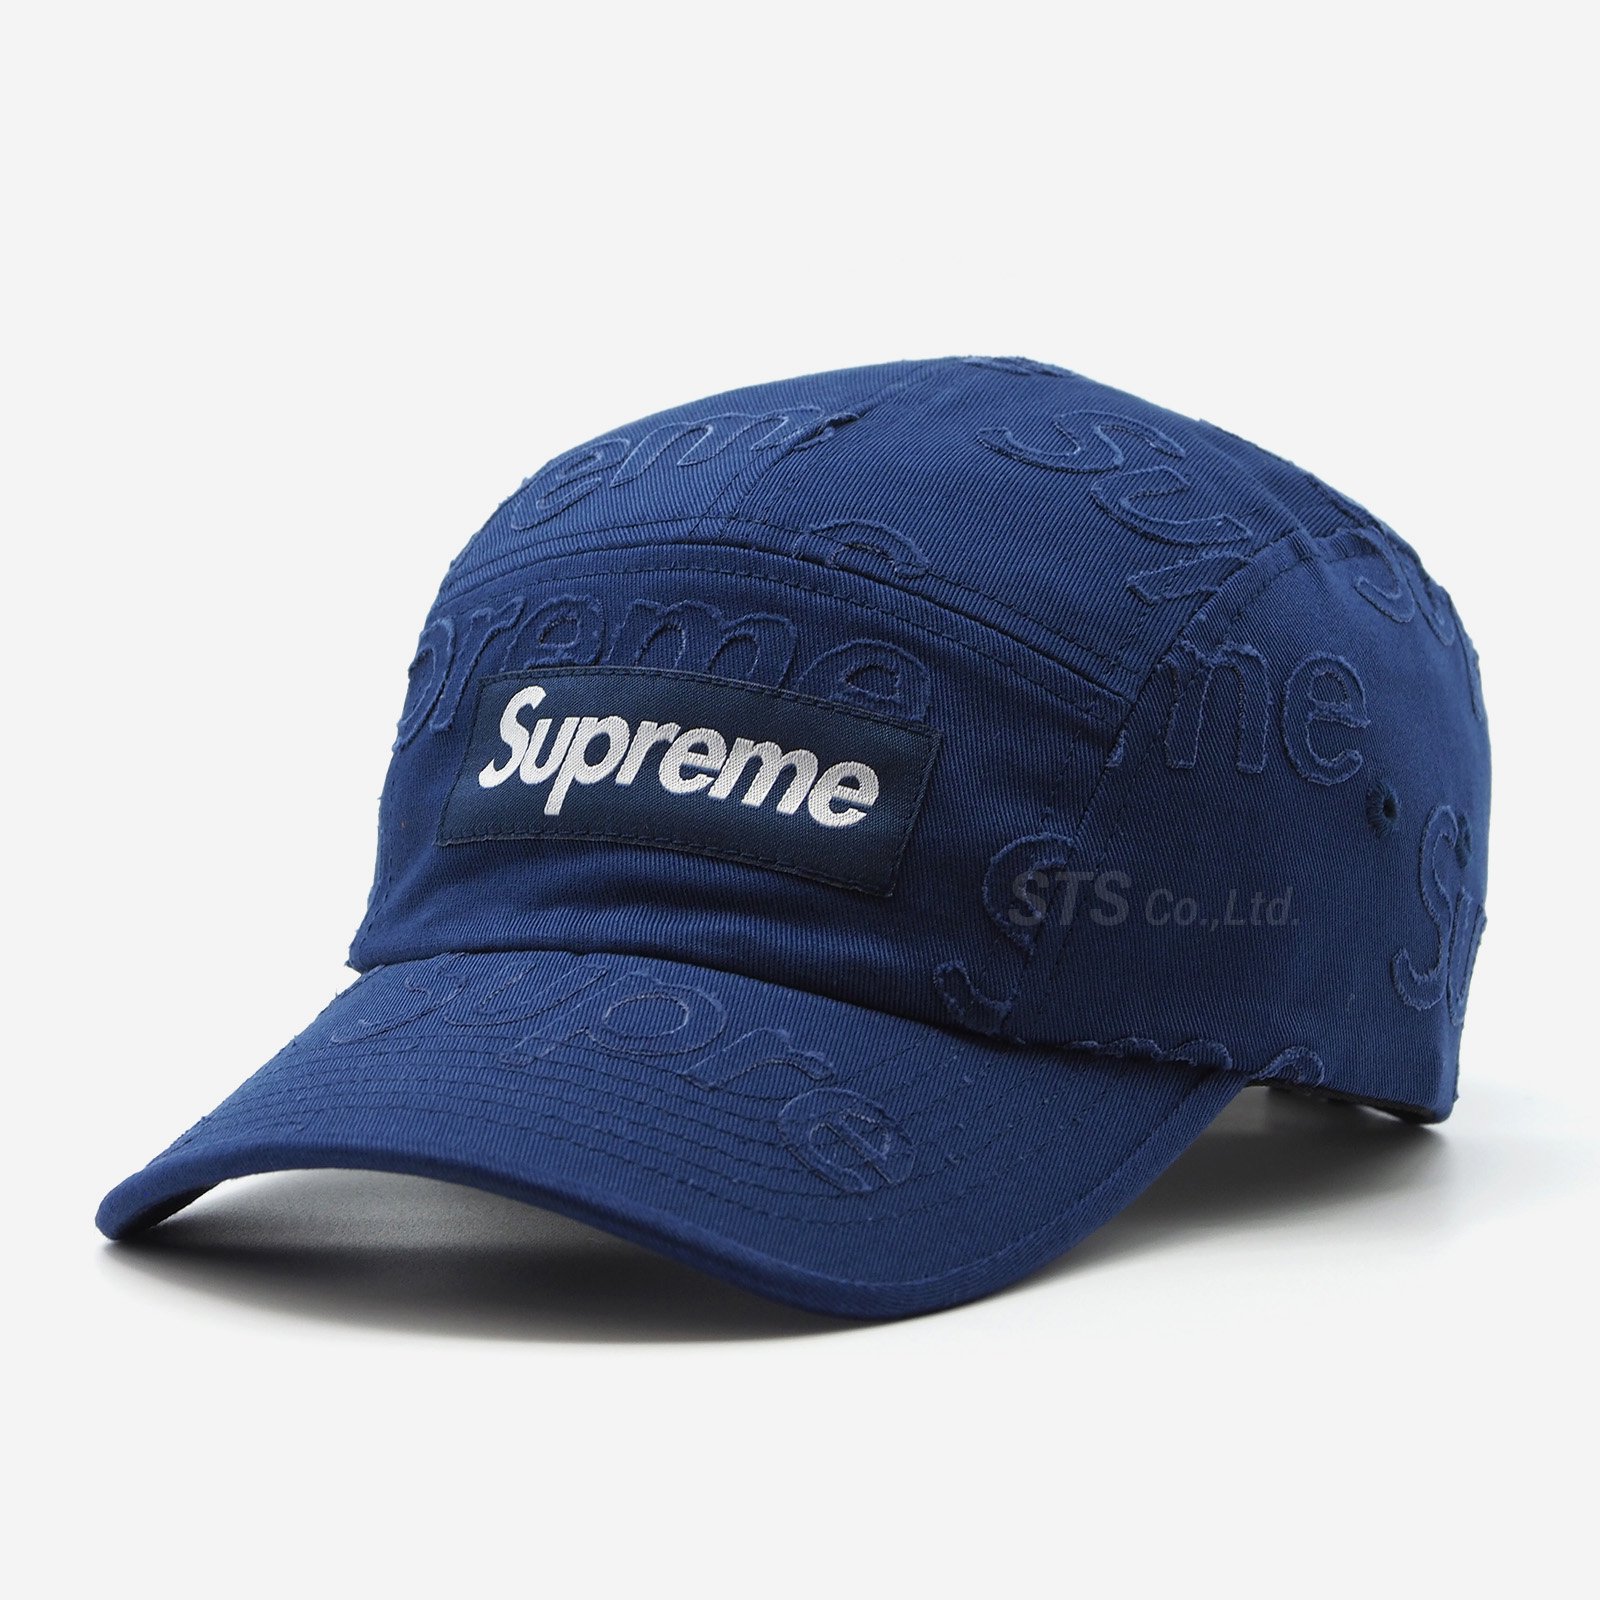 Supreme lasered twill camp cap